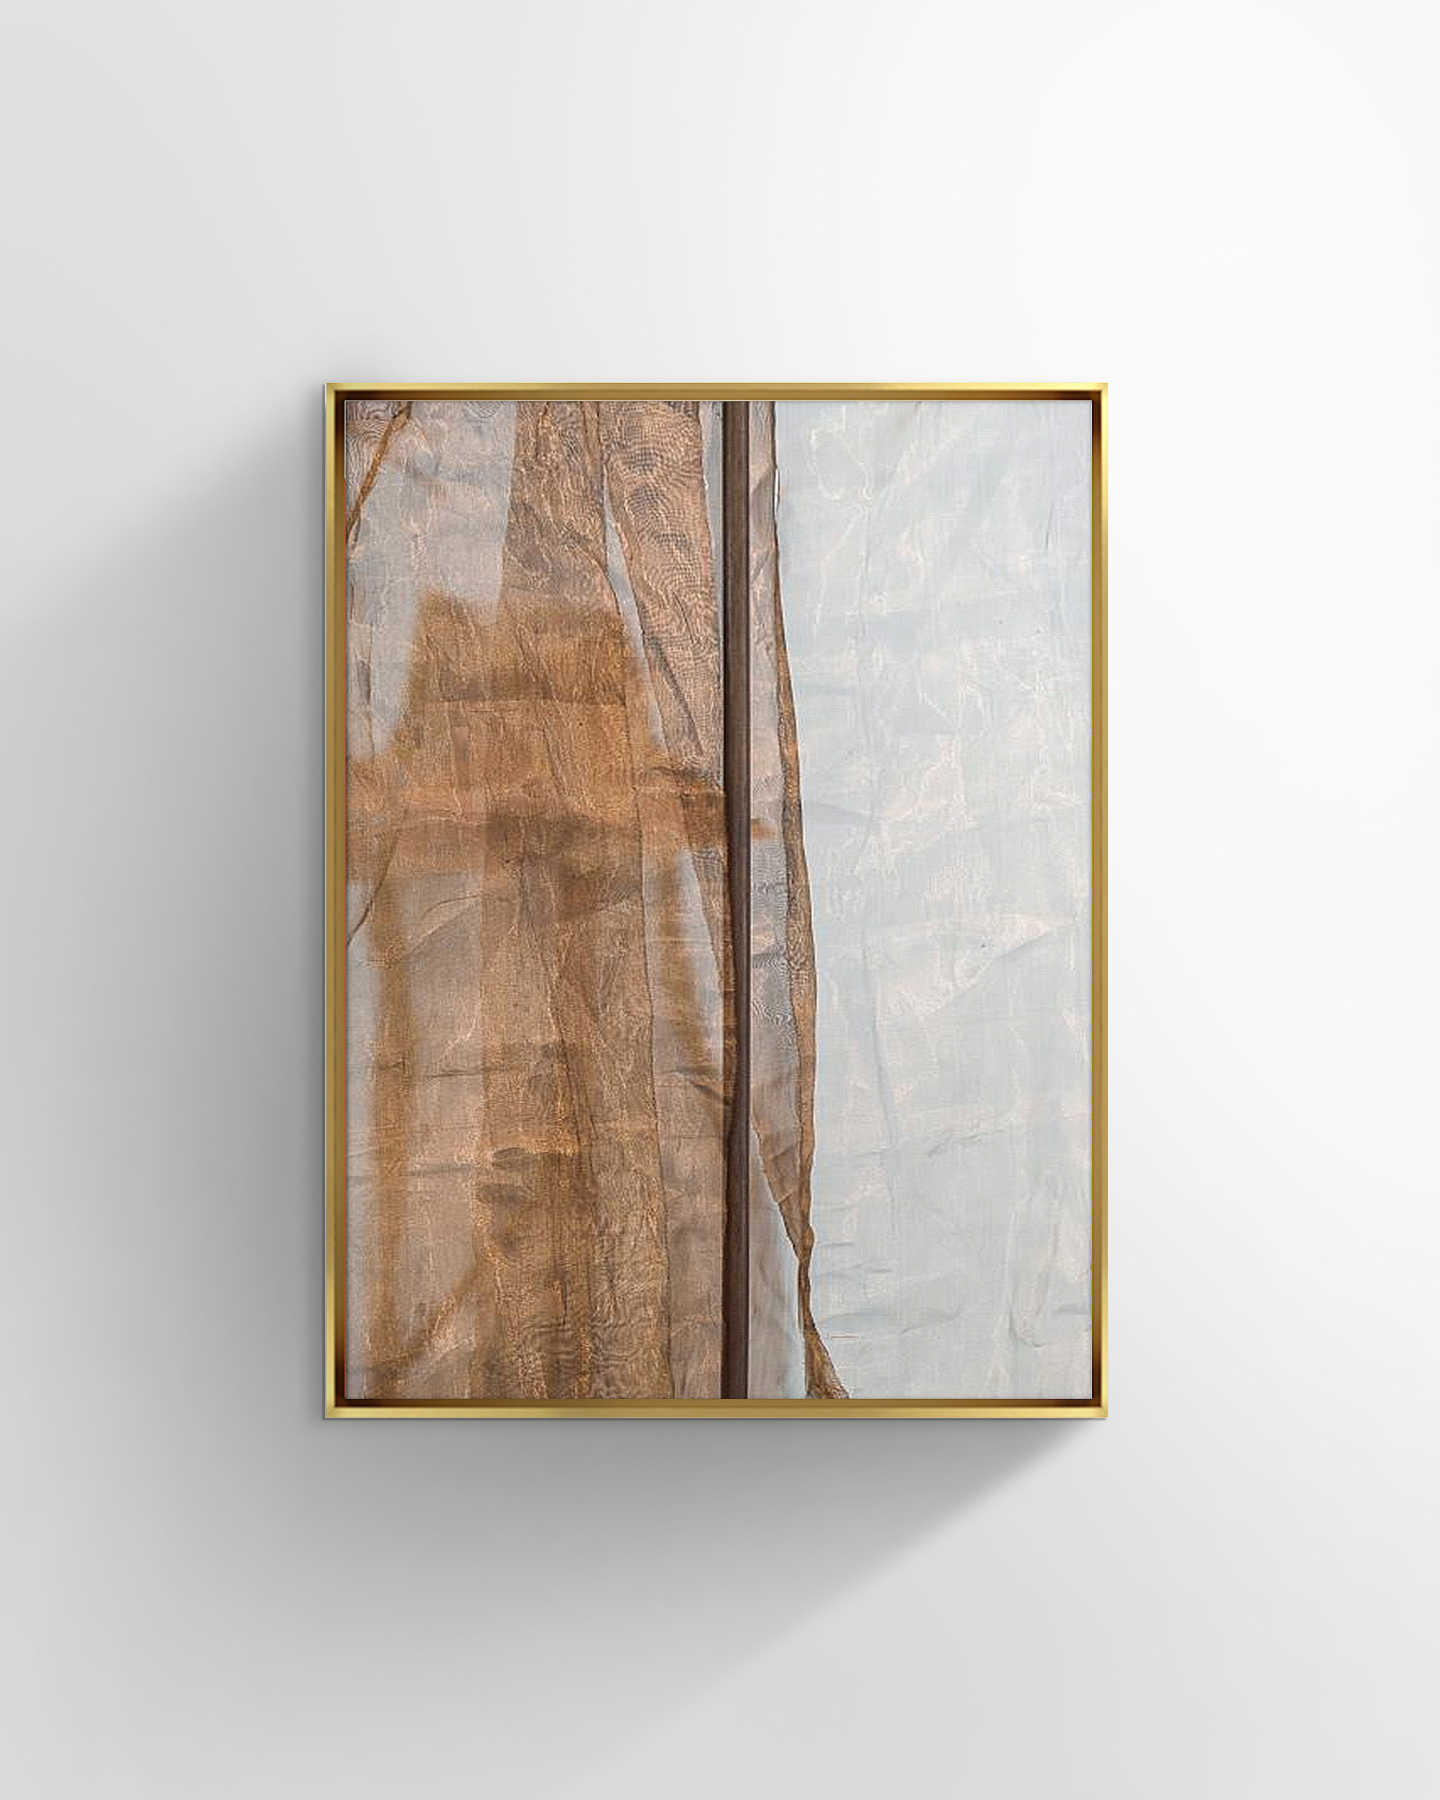 Gareth Abstract Wall Art - Gold Metal Frame - 2